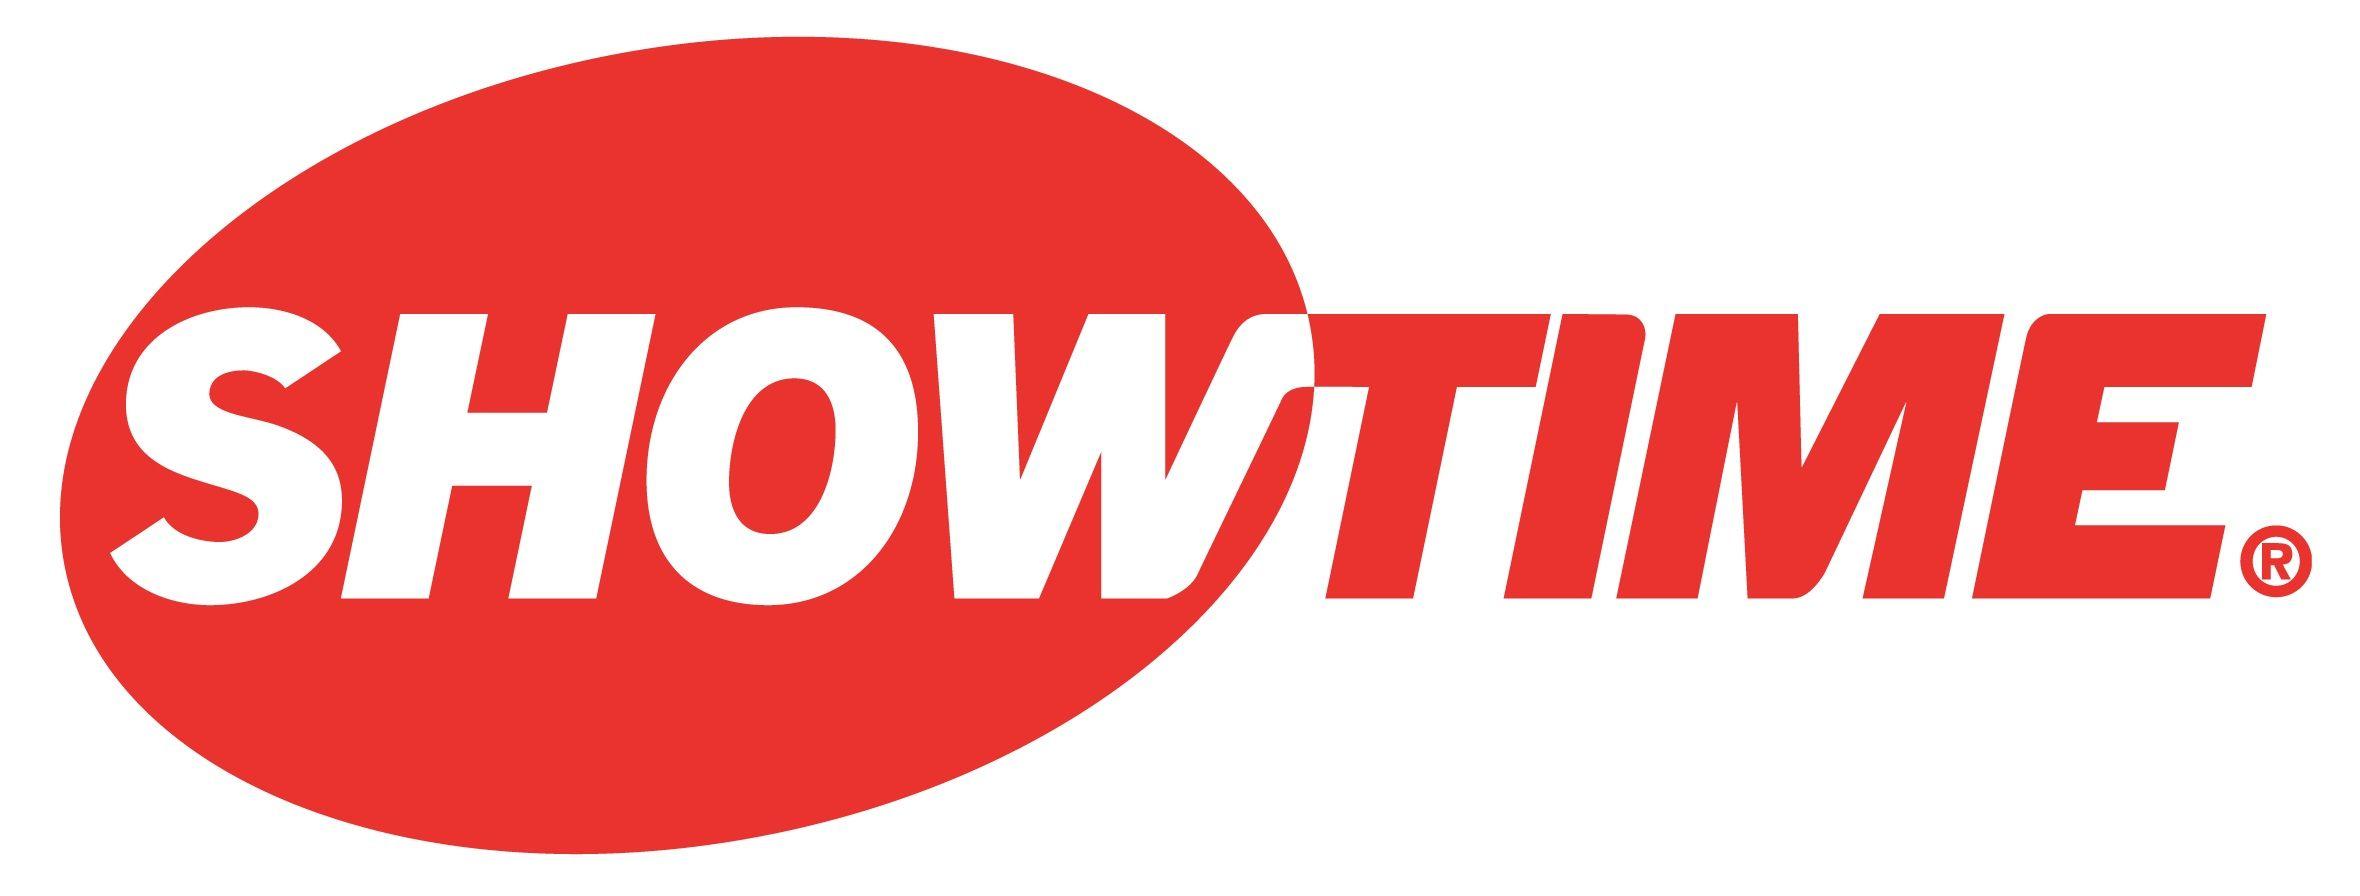 Showtime Logo - Showtime Logos